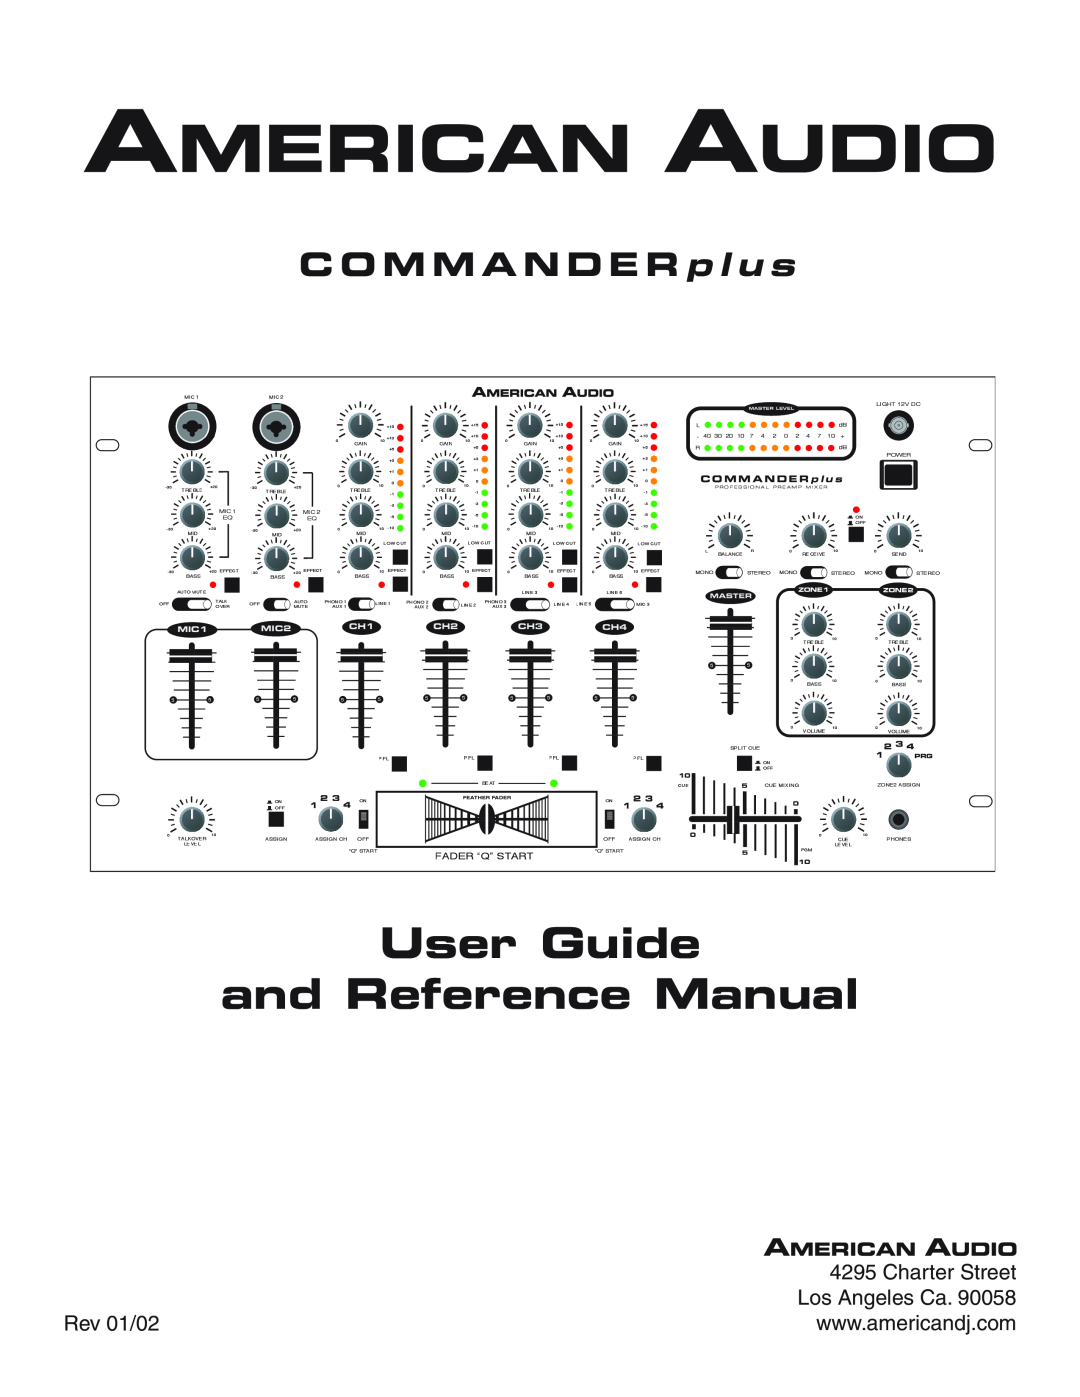 American Audio CommanderPlus manual User Guide and Reference Manual, C O M M A N D E R p l u s, Fader “Q ” Start, MIC1 